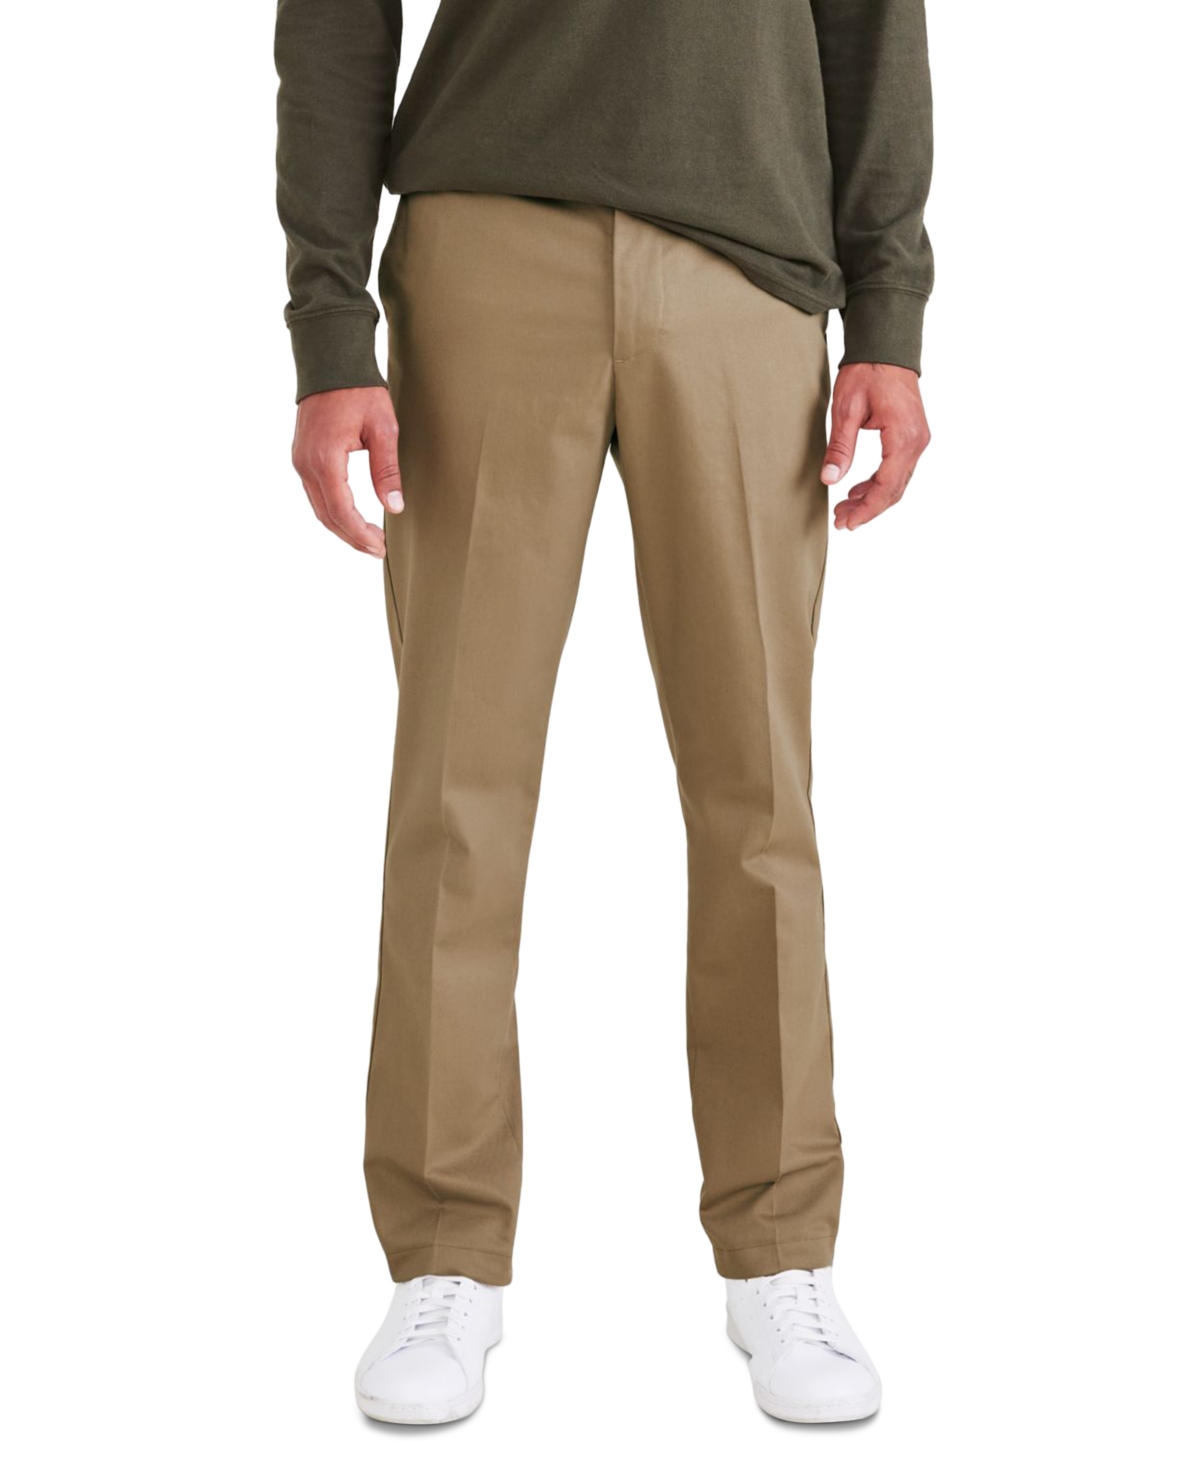 Men's Signature Slim Fit Iron Free Khaki Pants with Stain Defender - Cloud